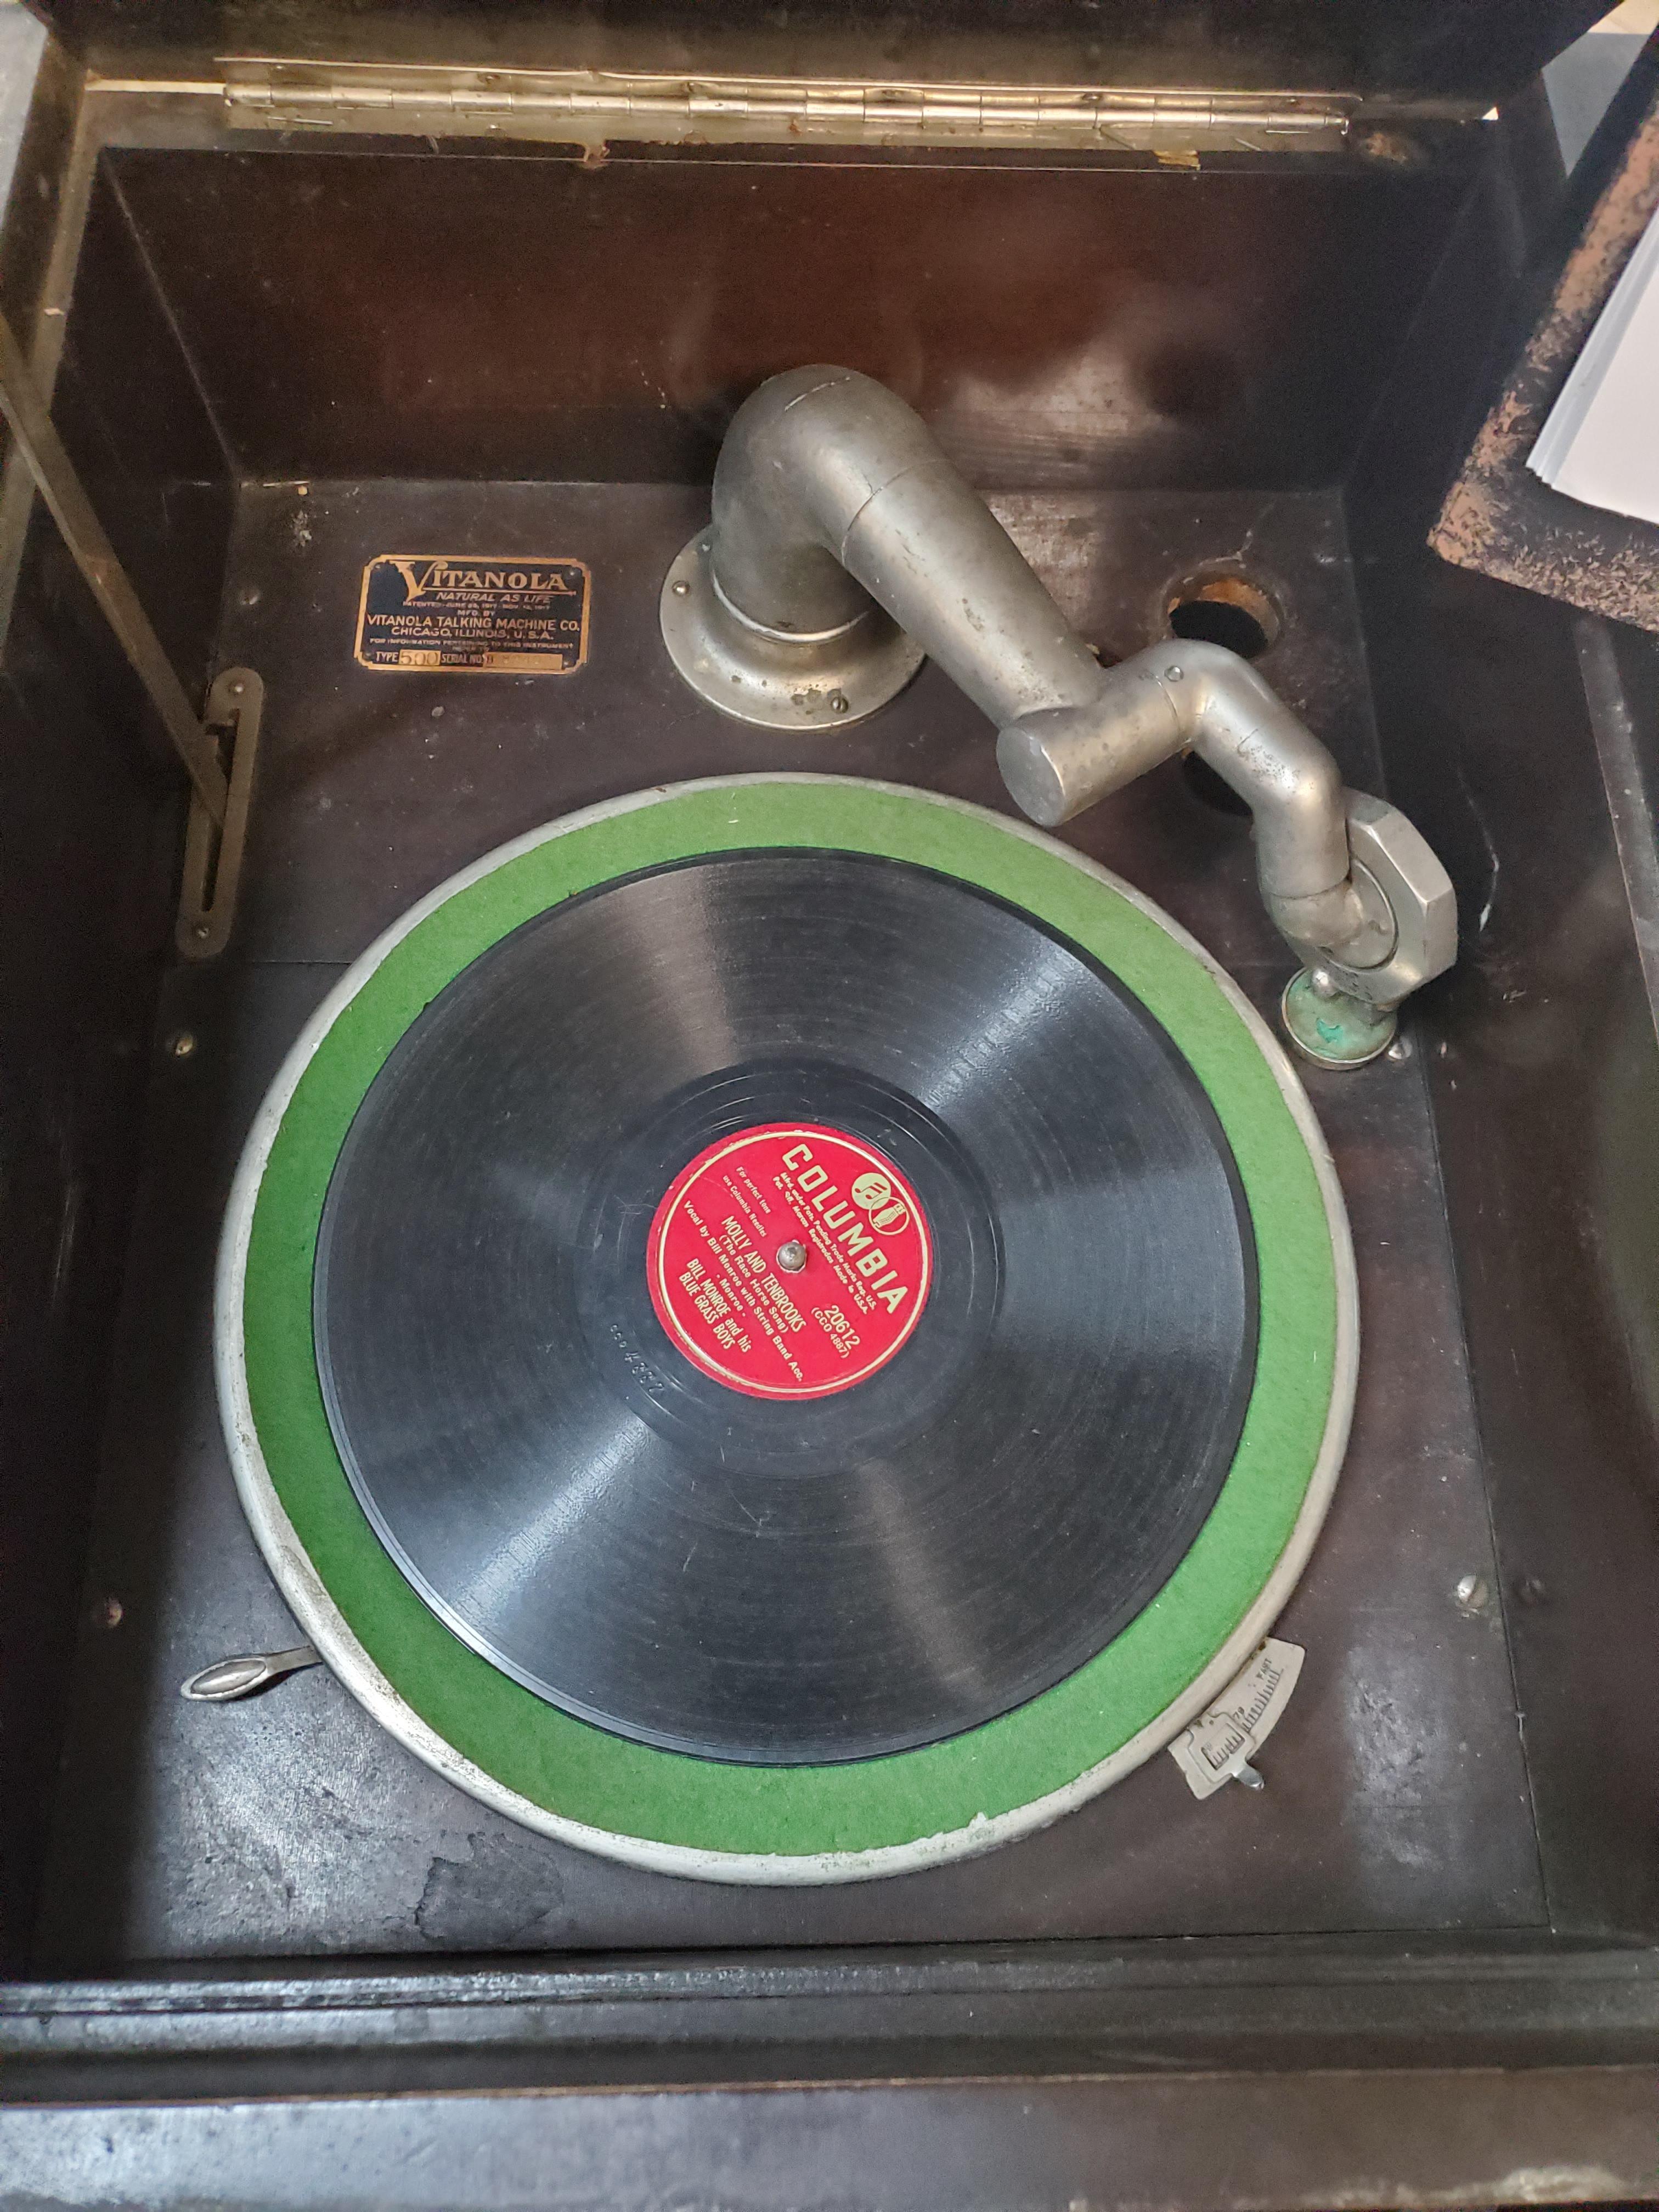 Antique Vitanola Talking Machine Will Play A Record